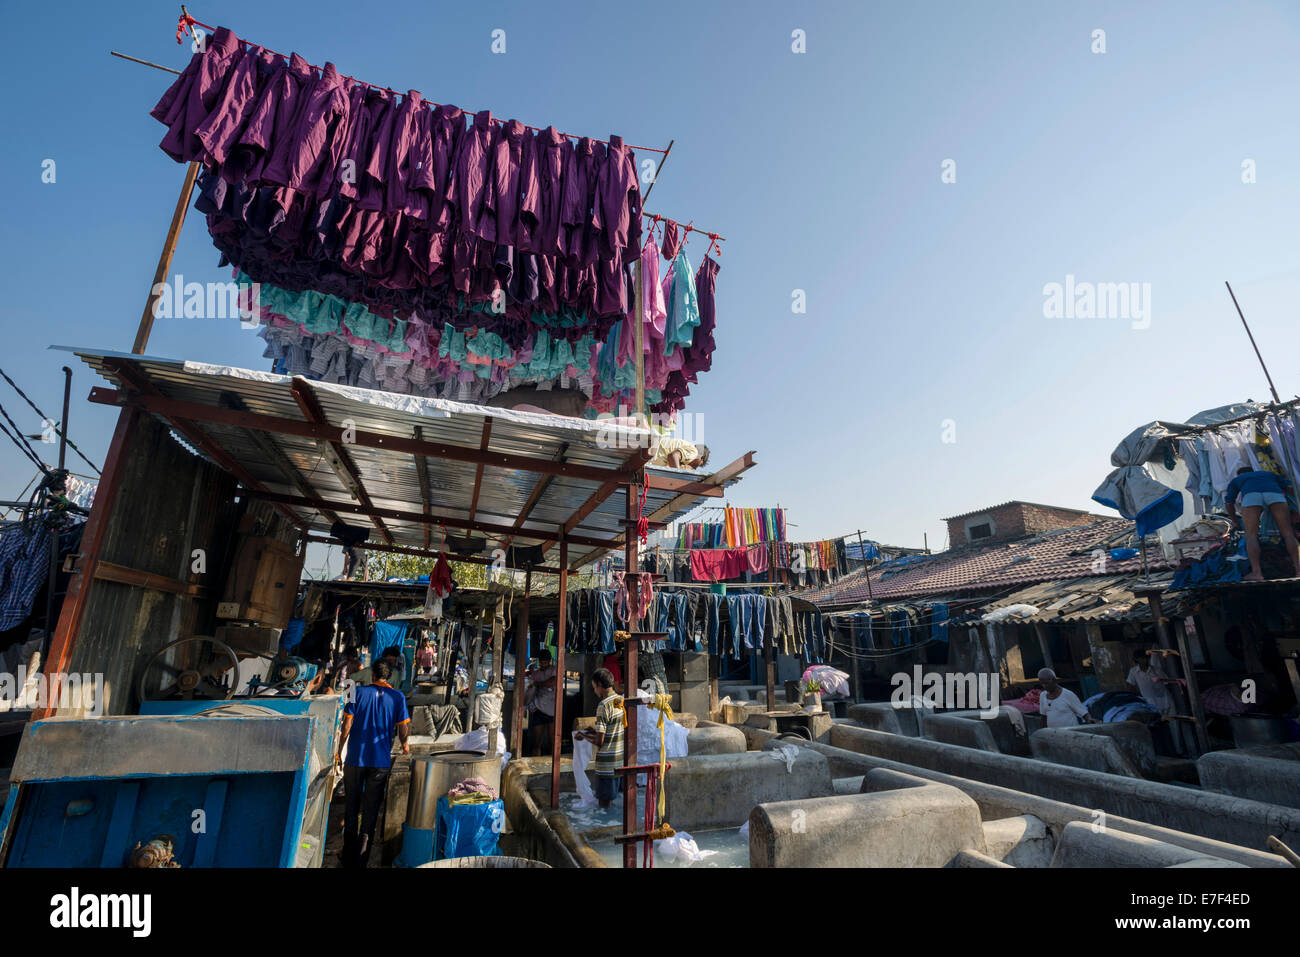 Drying laundry, Mahalaxmi Dhobi Ghat, laundry district of Mumbai, Maharashtra, India Stock Photo